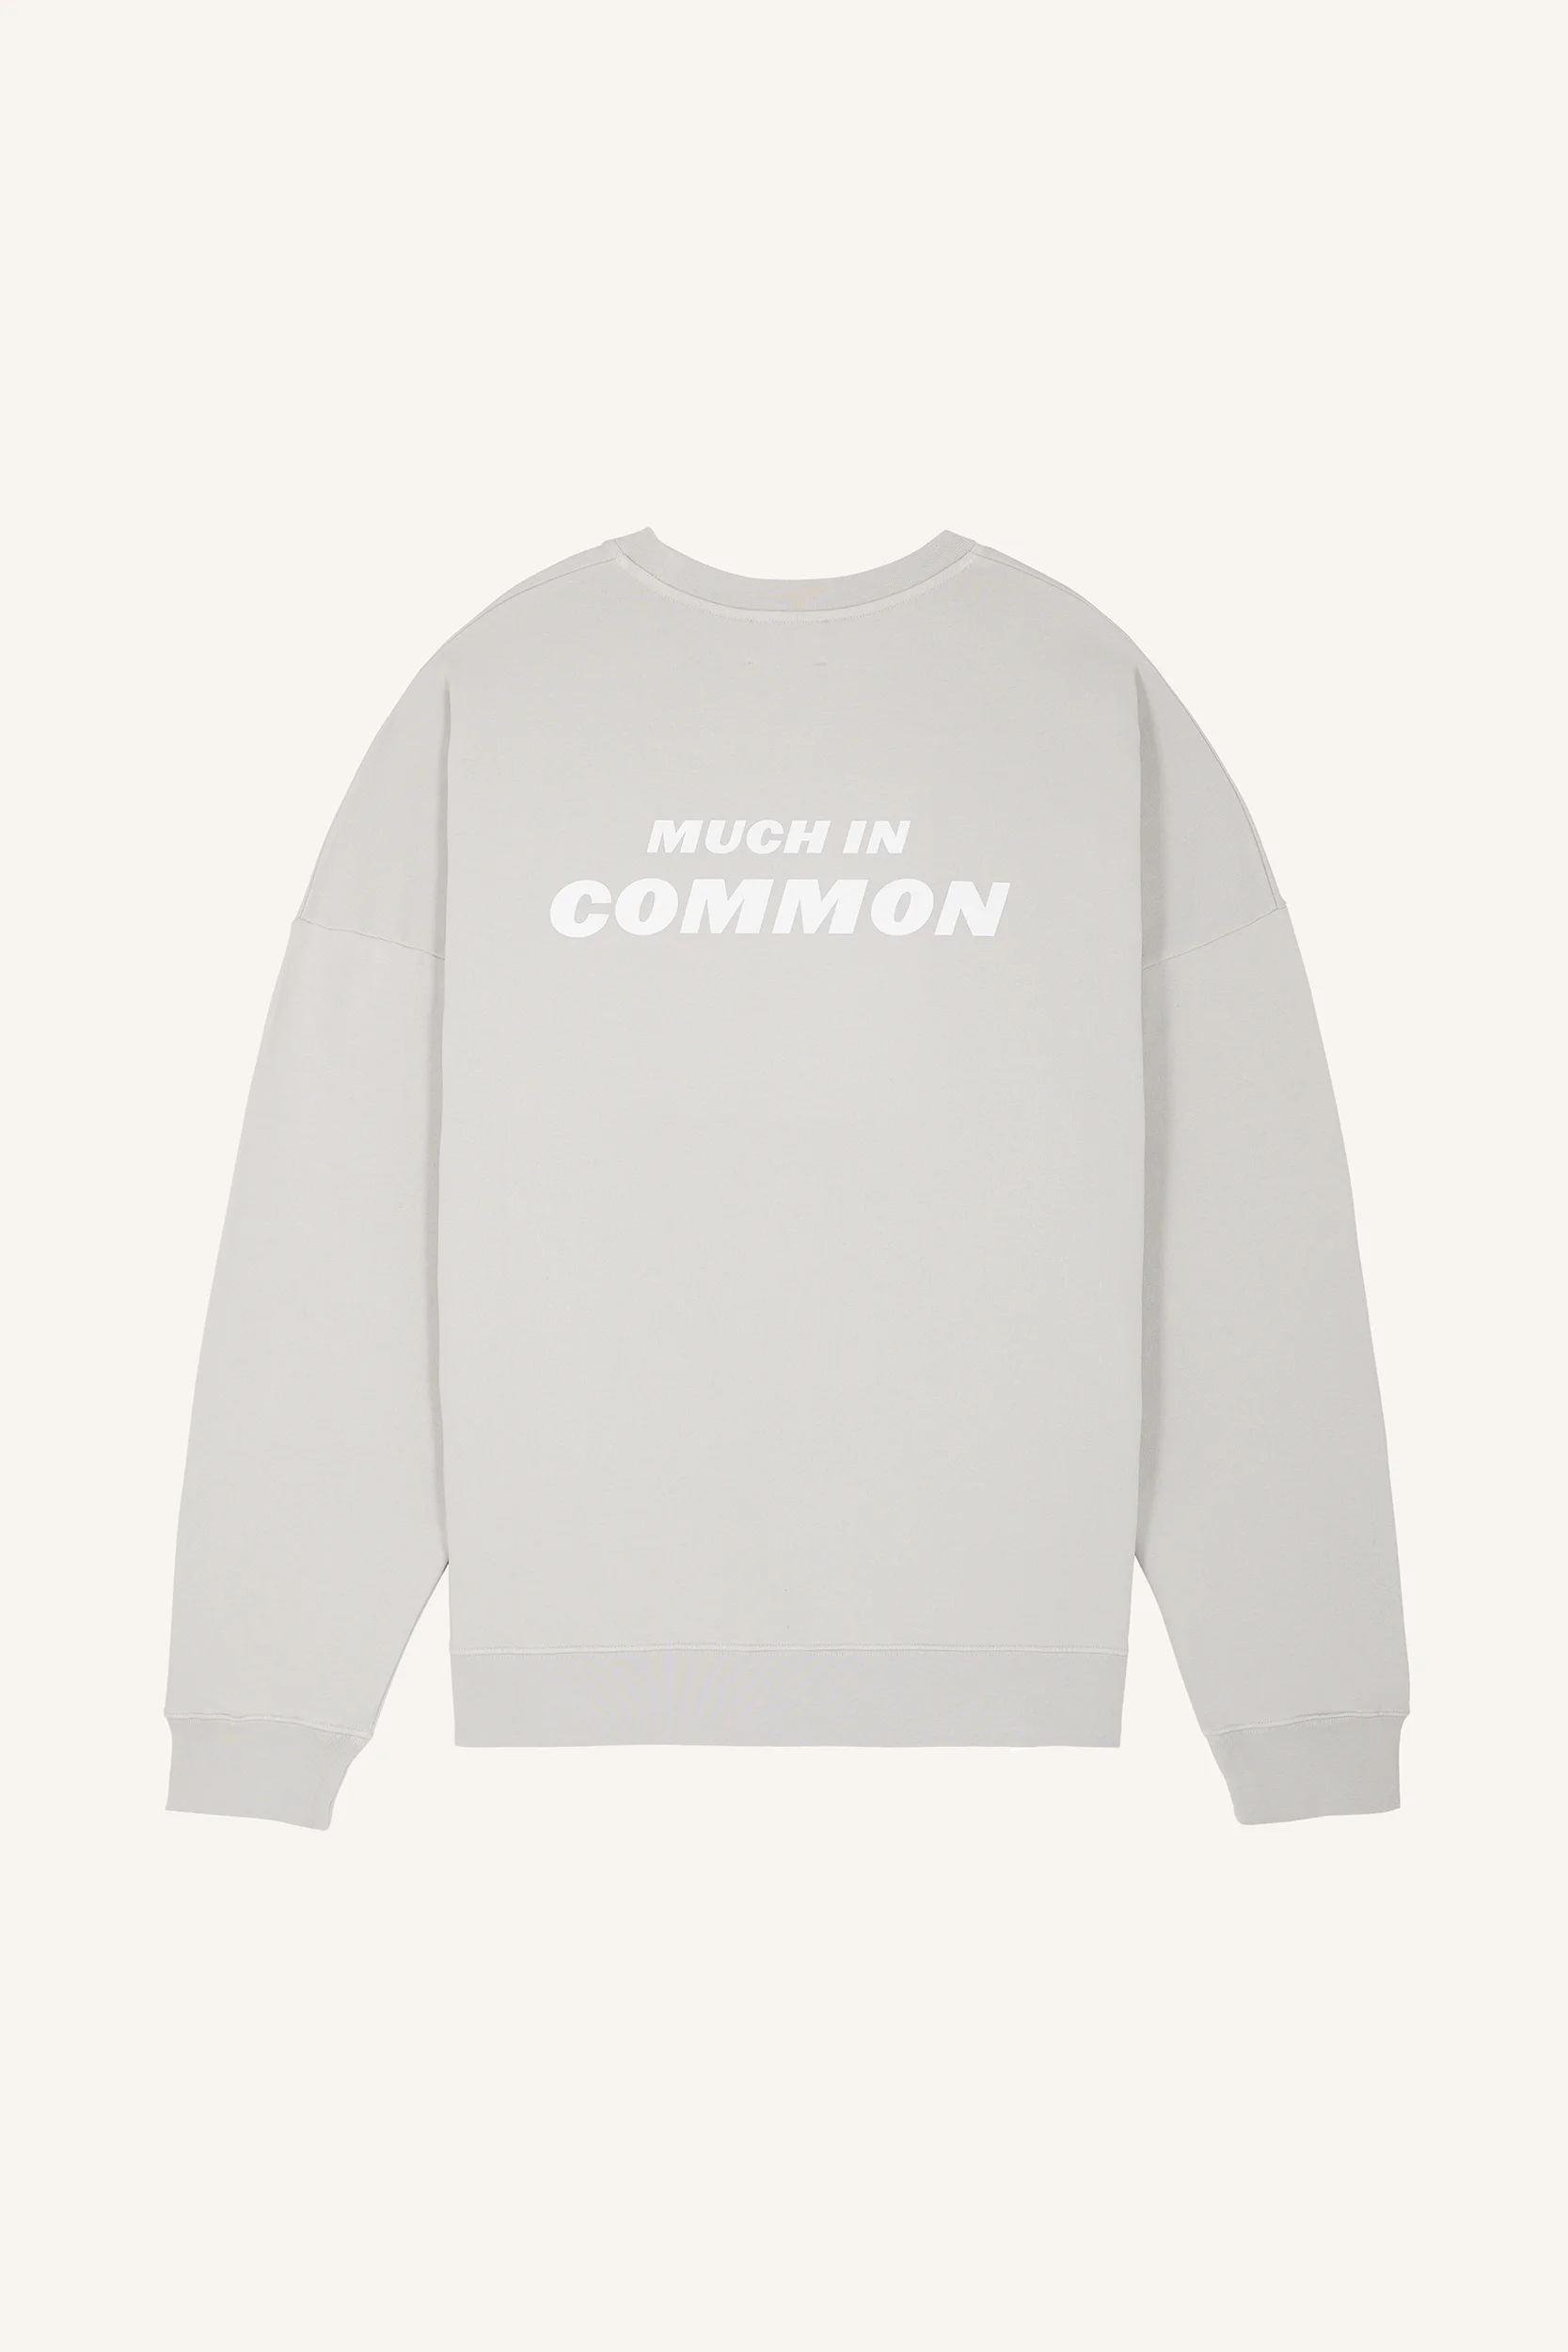 Much in Common Sweatshirt